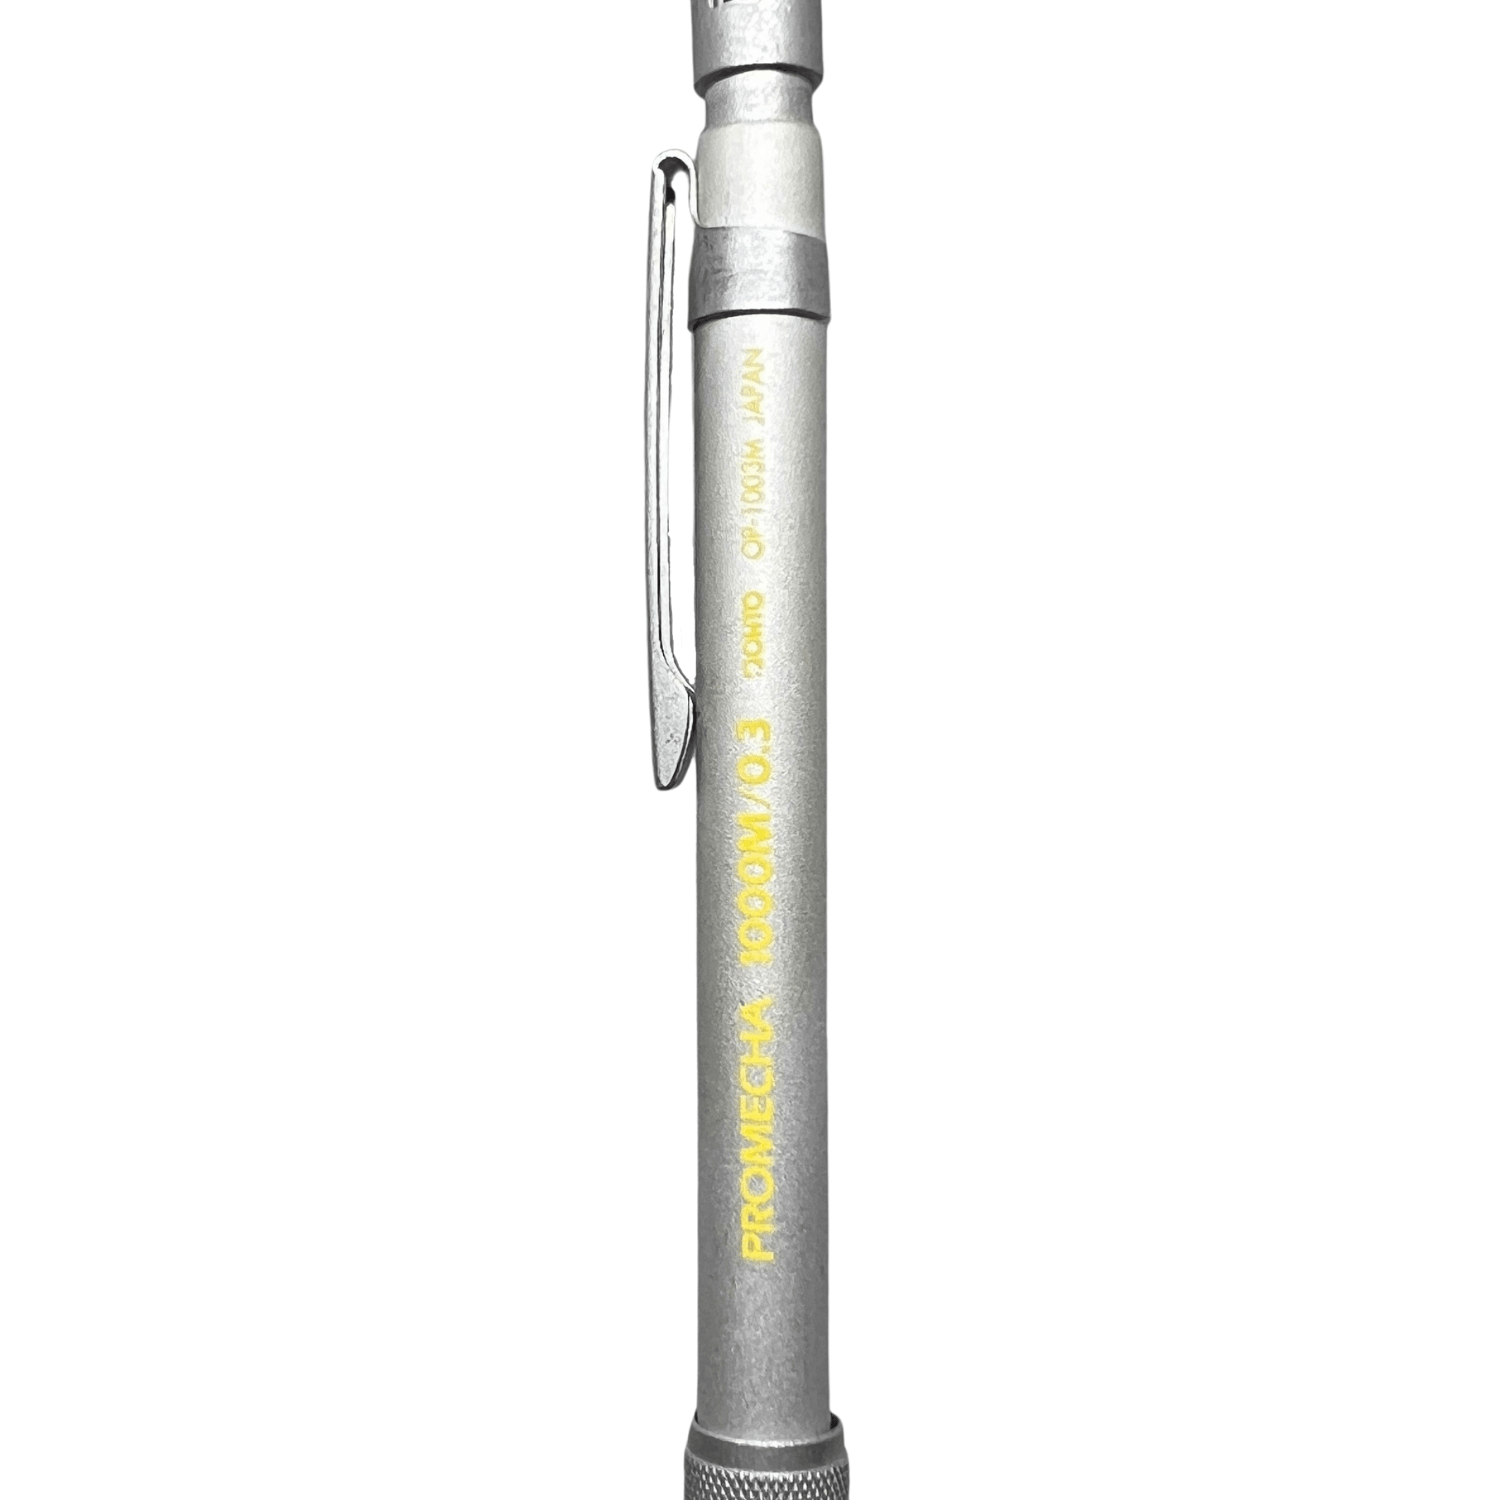 Ohto Promecha 1000M 0.3 MM Mechanical Pencil